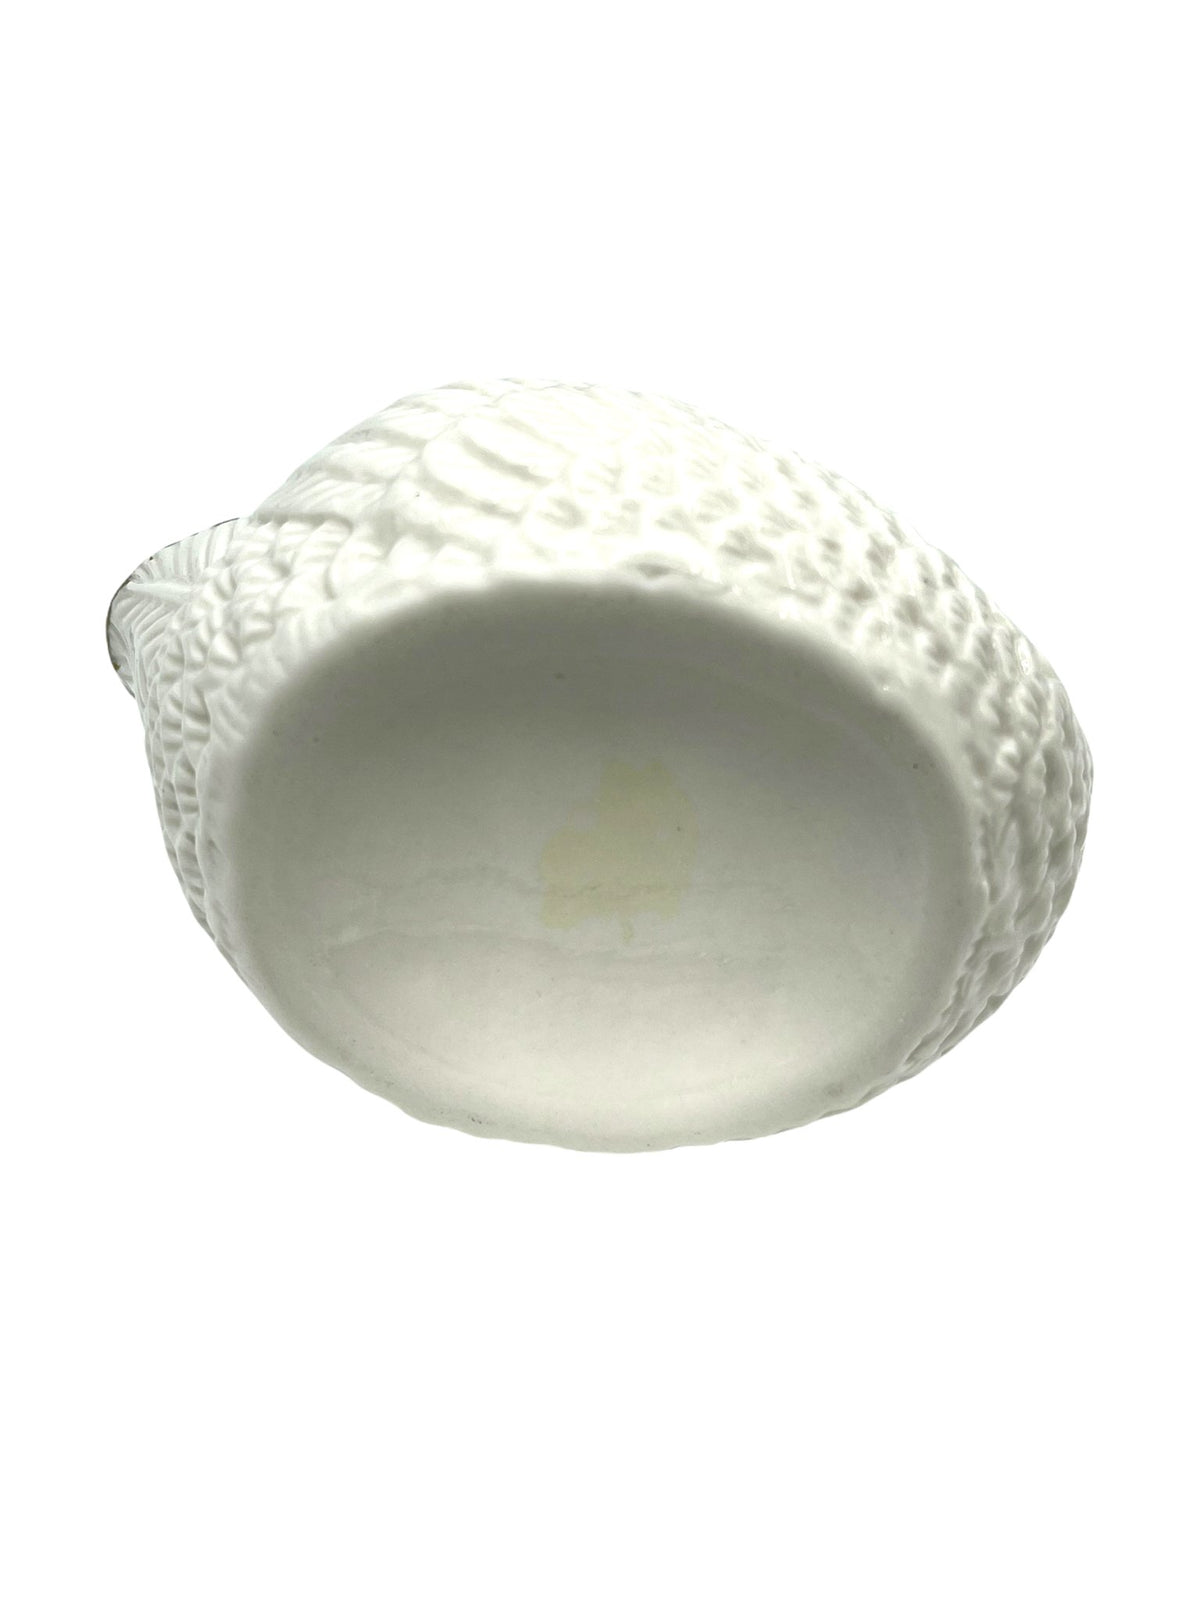 White Swan Porcelain Vintage Vase Trinket Dish - 24 Wishes Vintage Jewelry